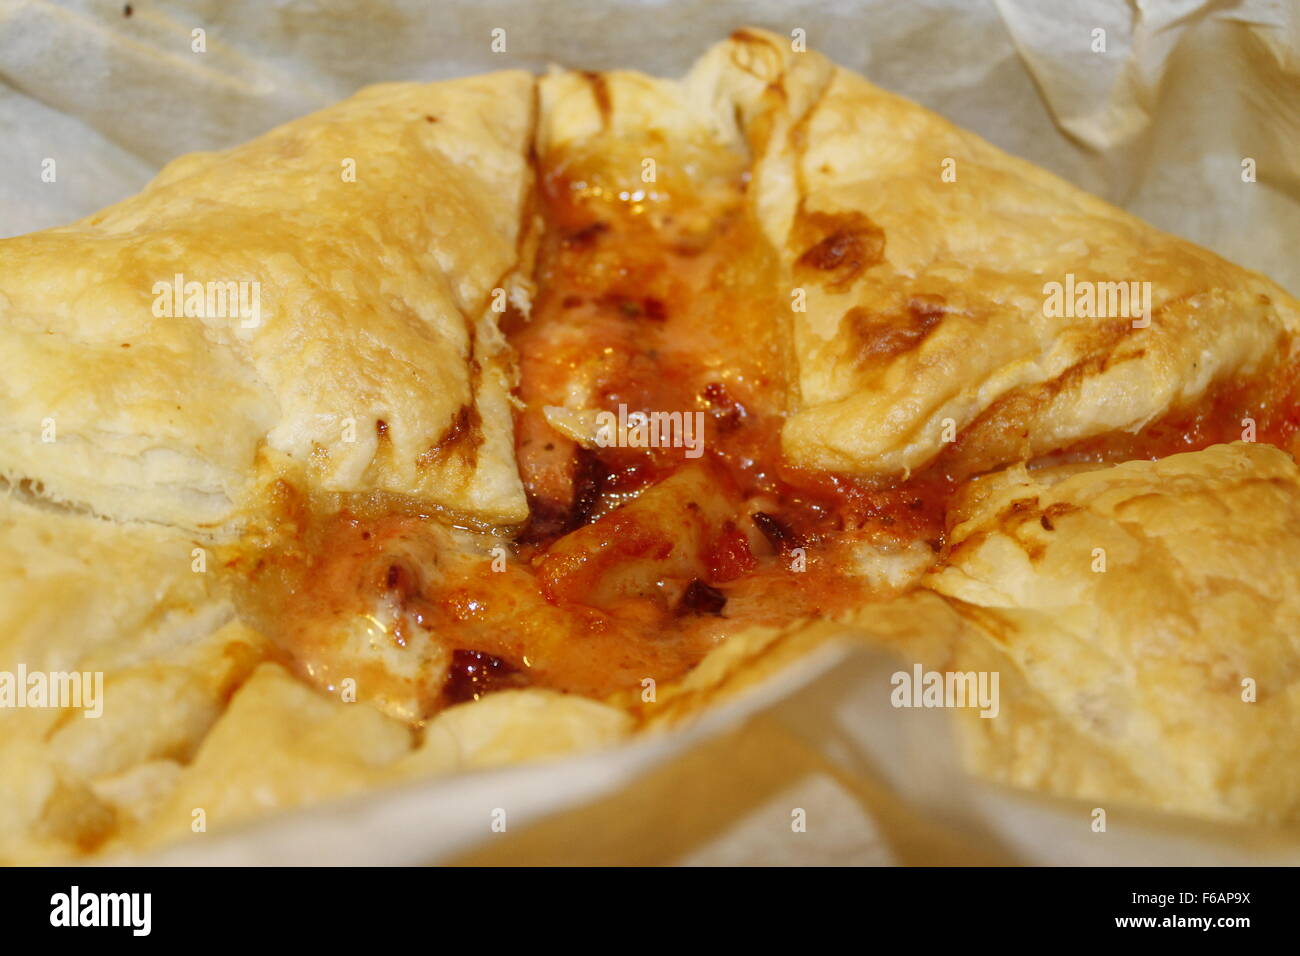 small savory pie with mozzarella cheese and tomato sauce Stock Photo